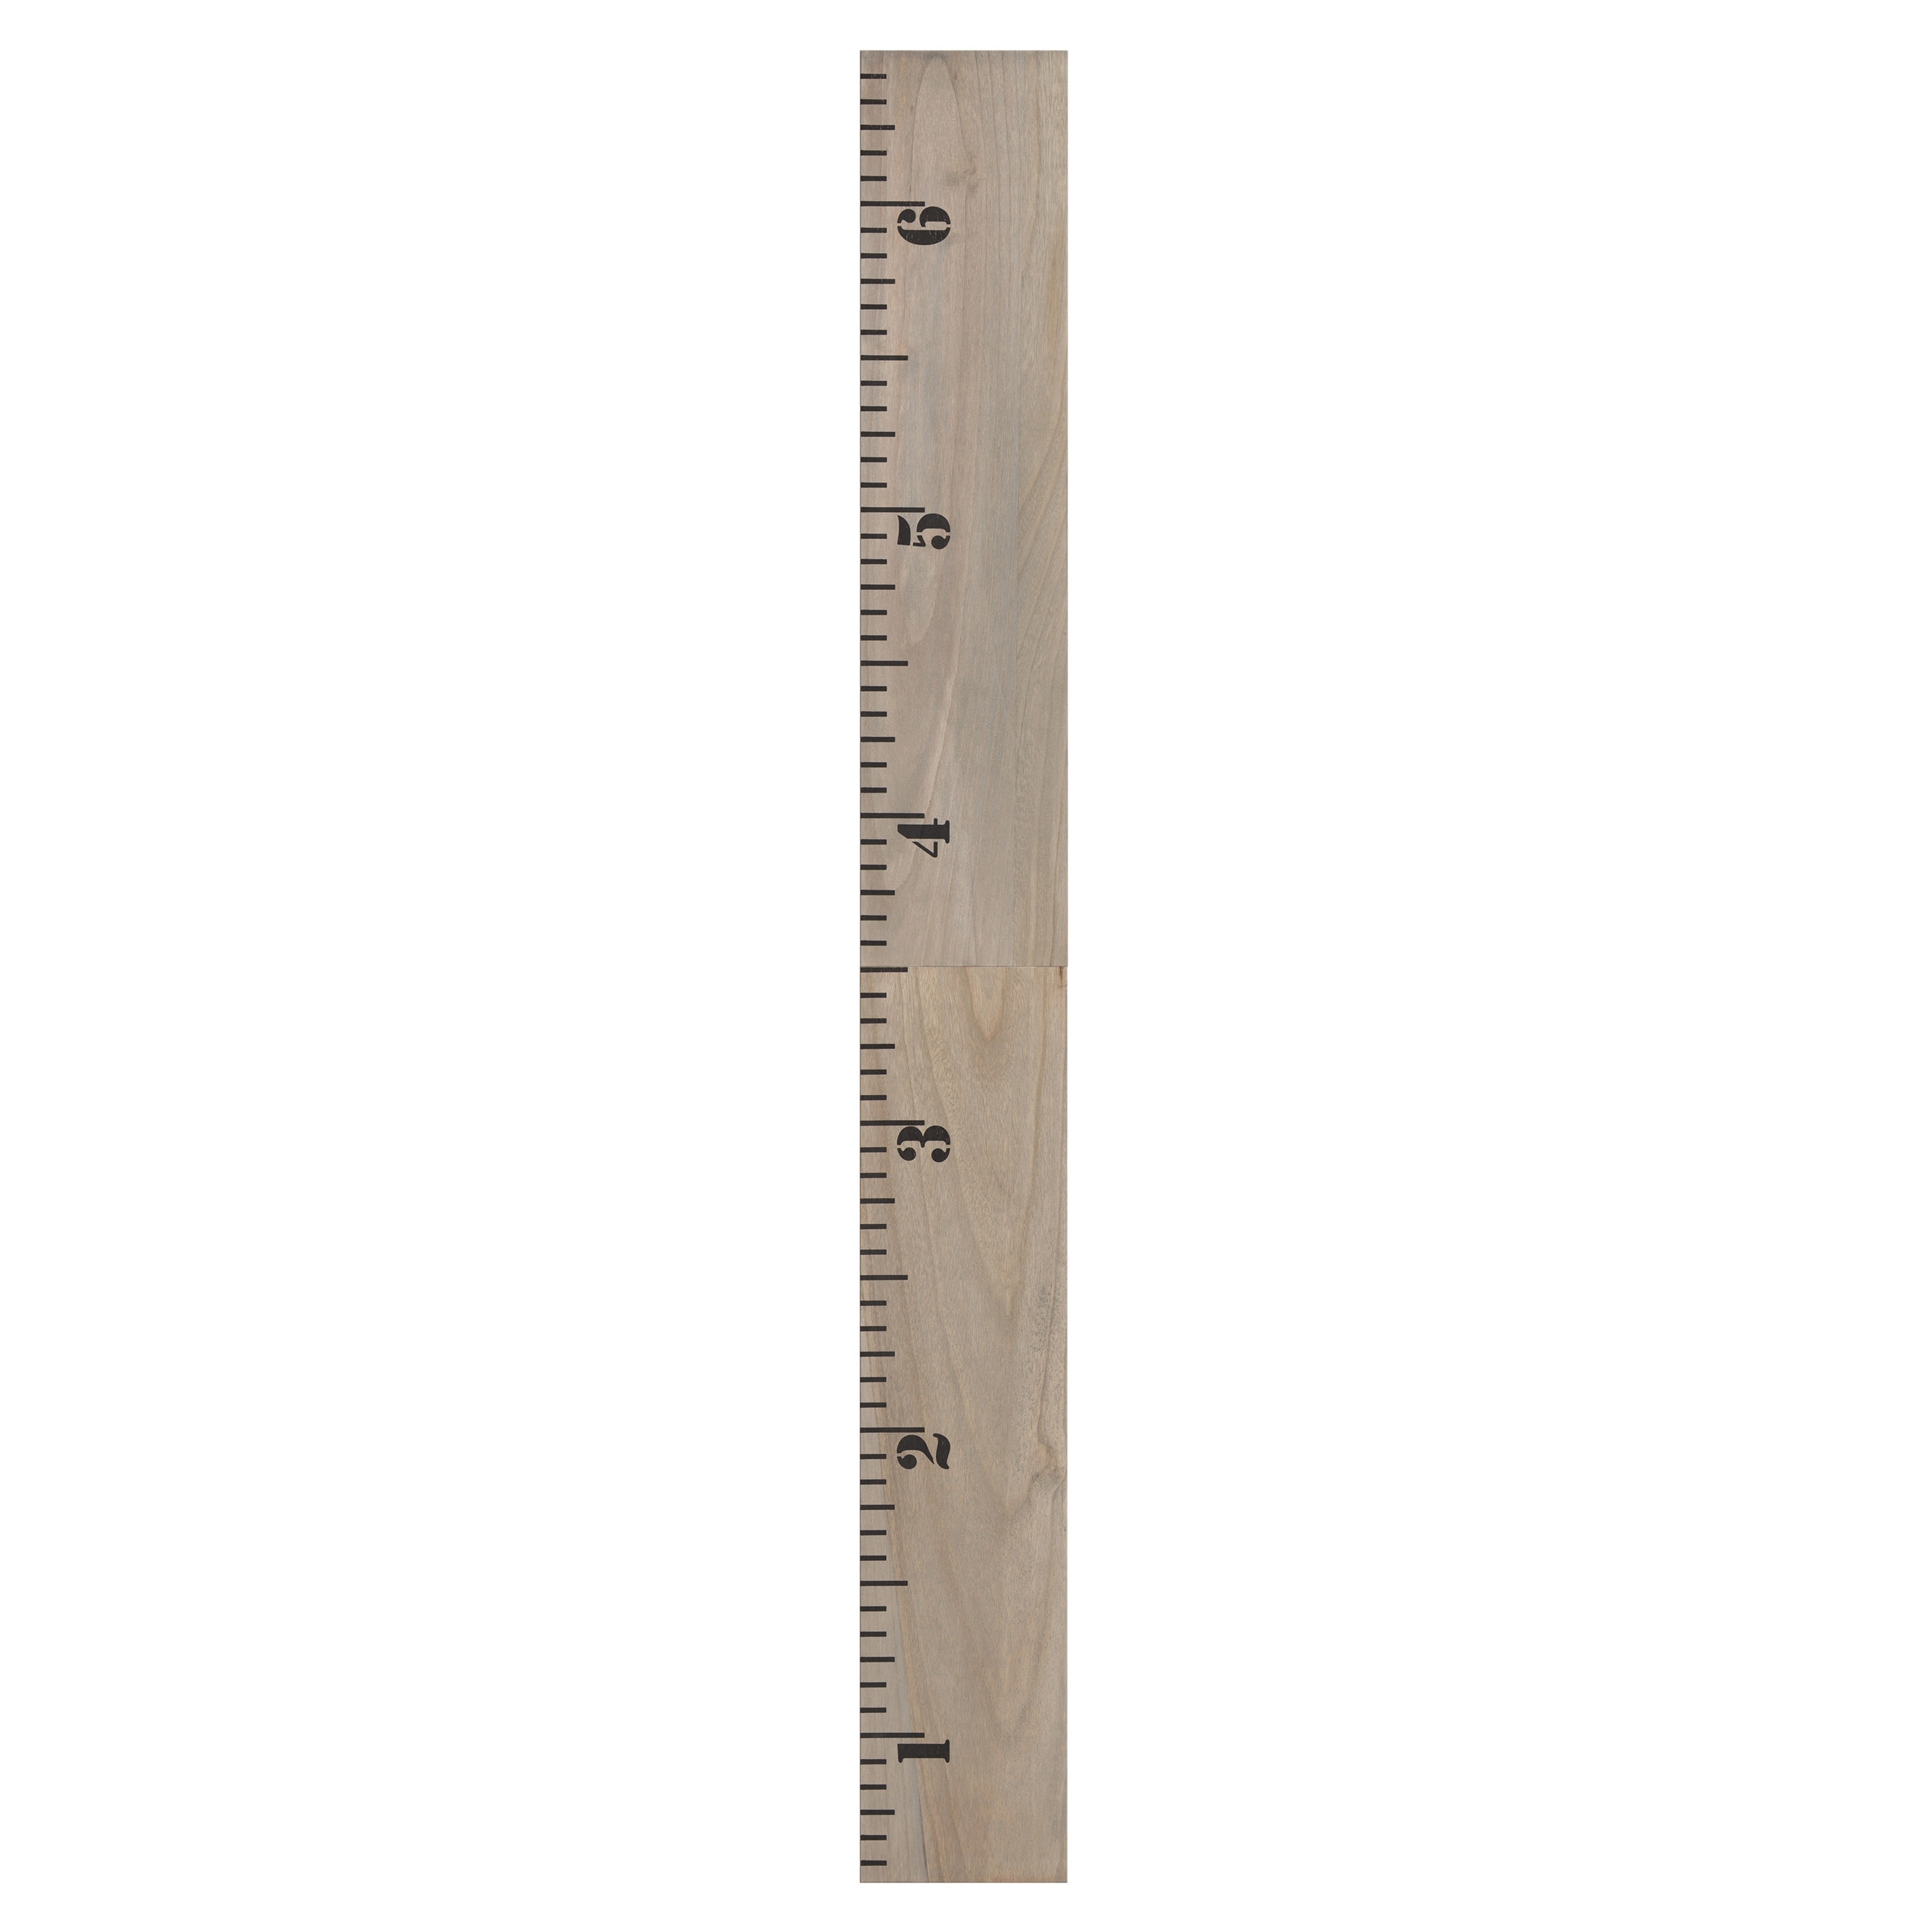 5 inch ruler